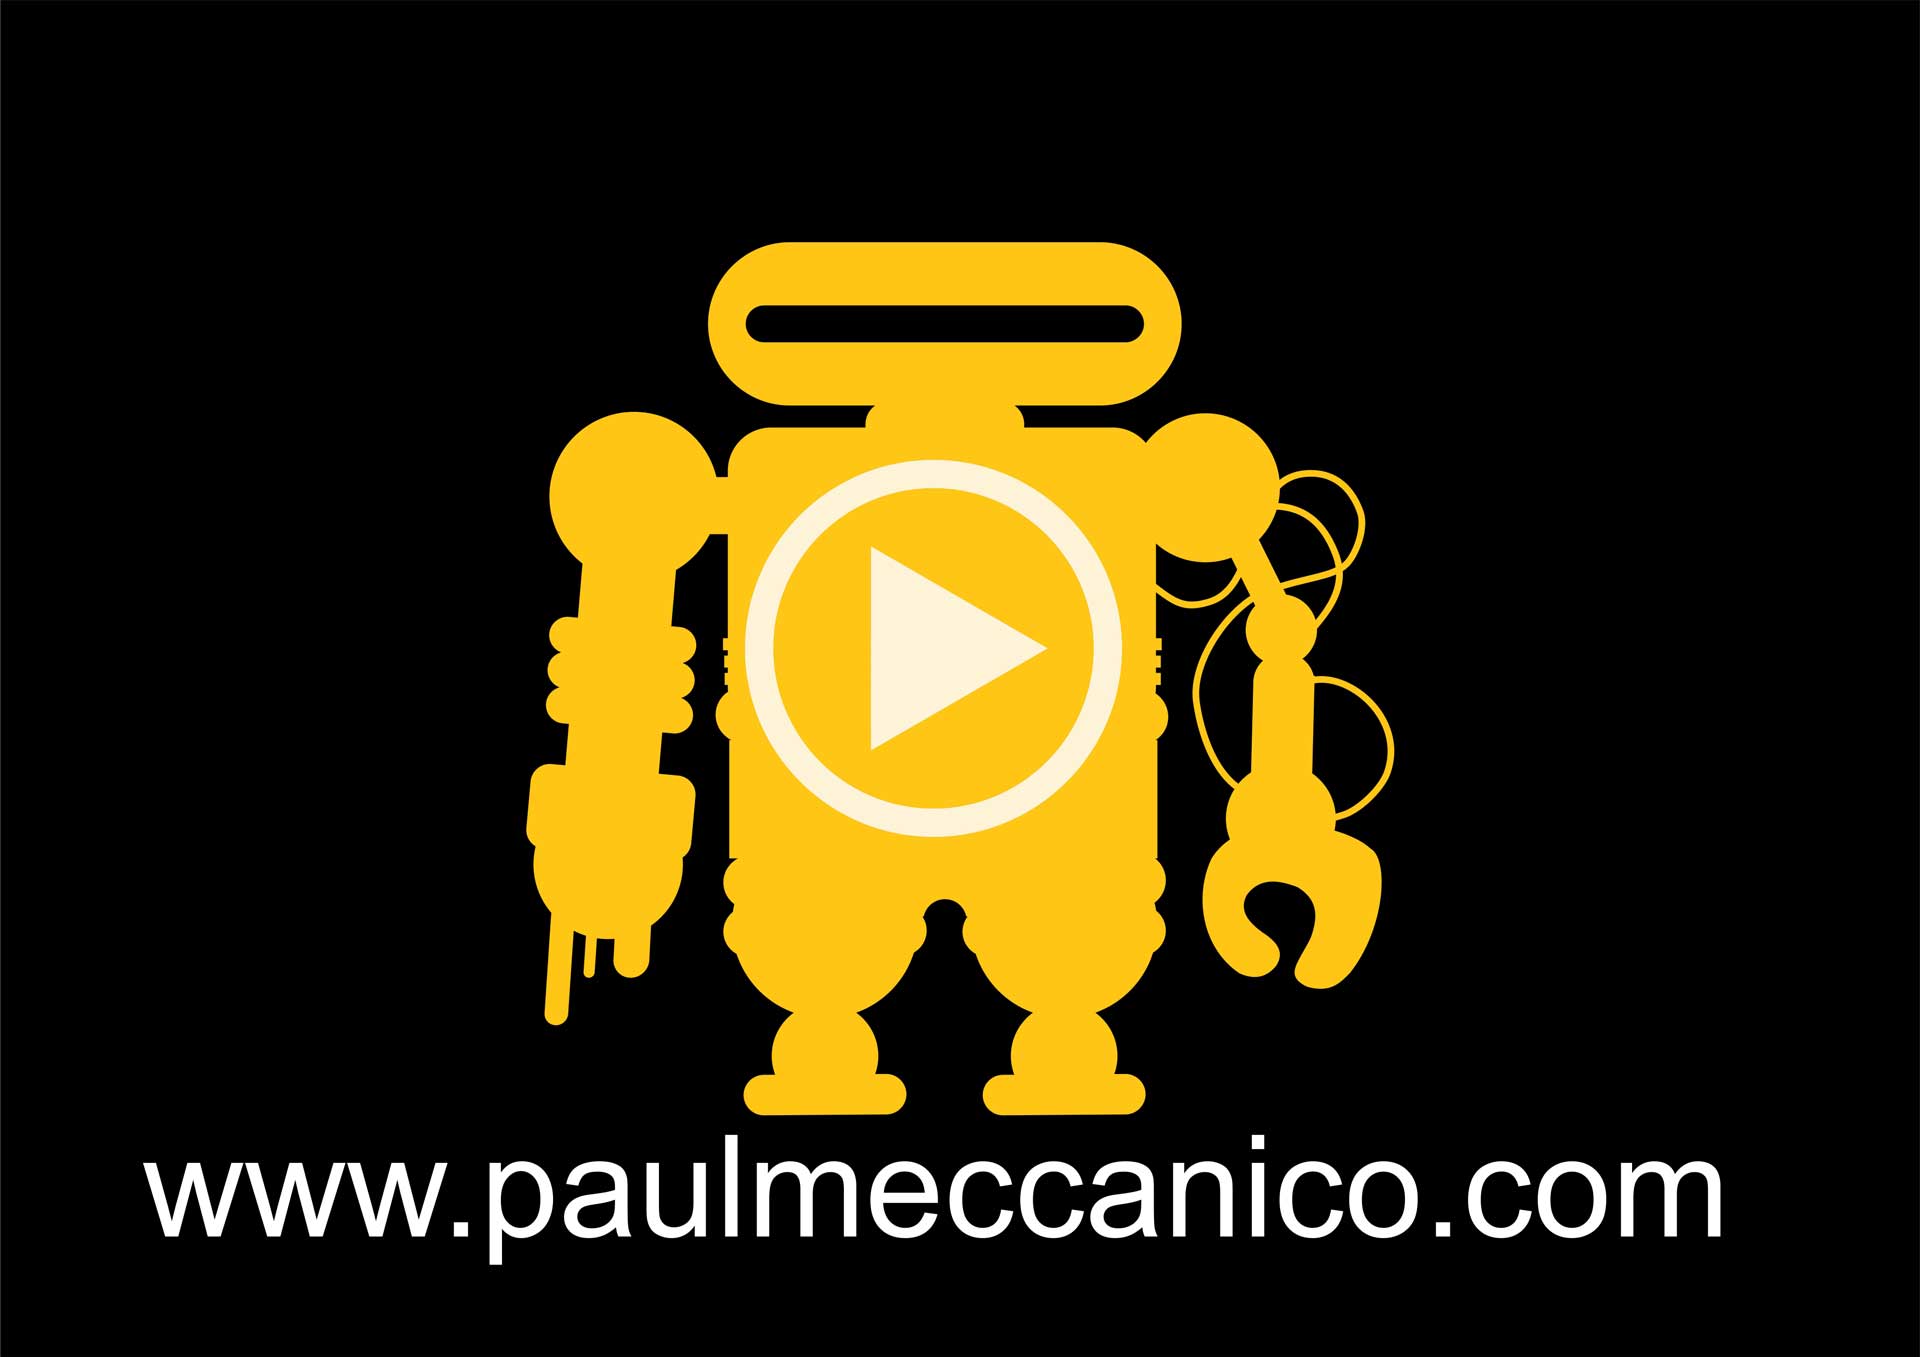 New website Paul Meccanico